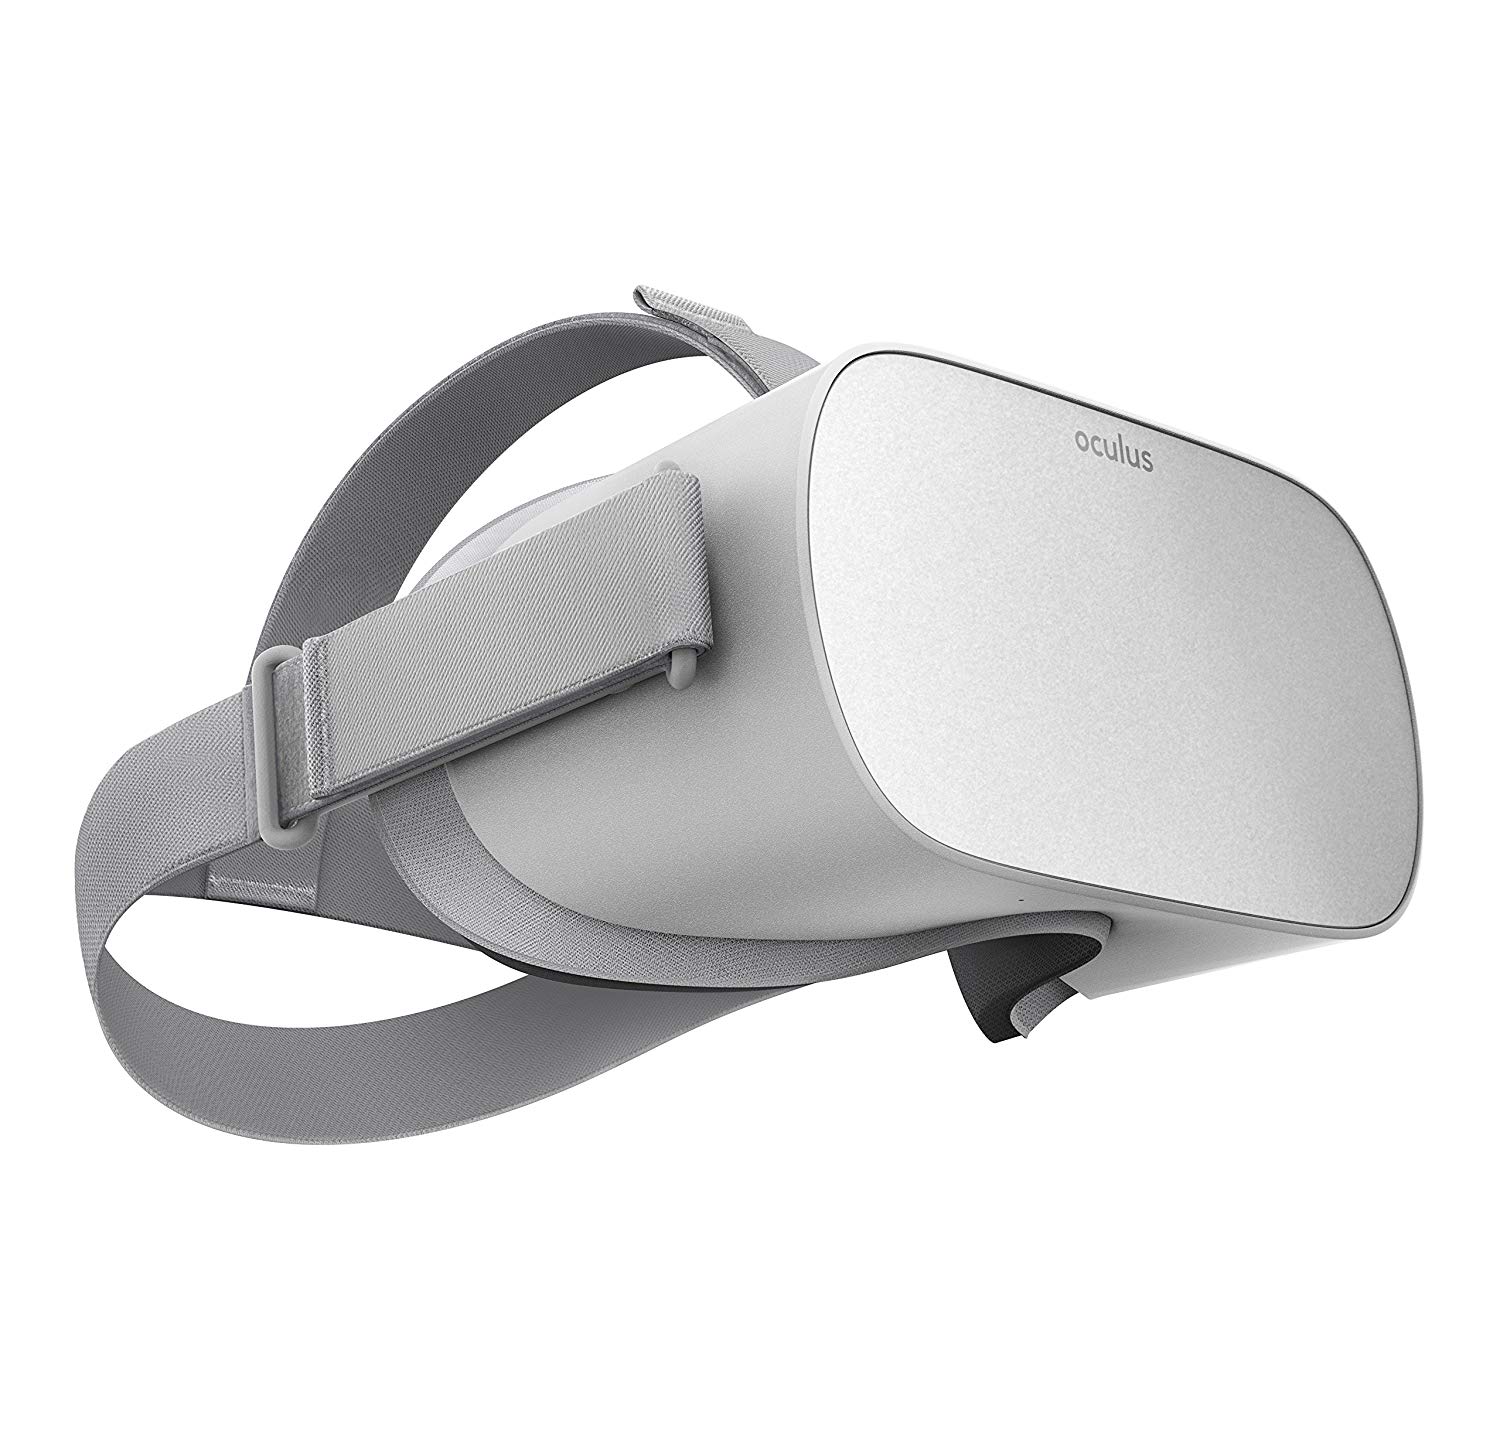 oculus go vr眼镜设计—在家也能感受超强的视觉效果!